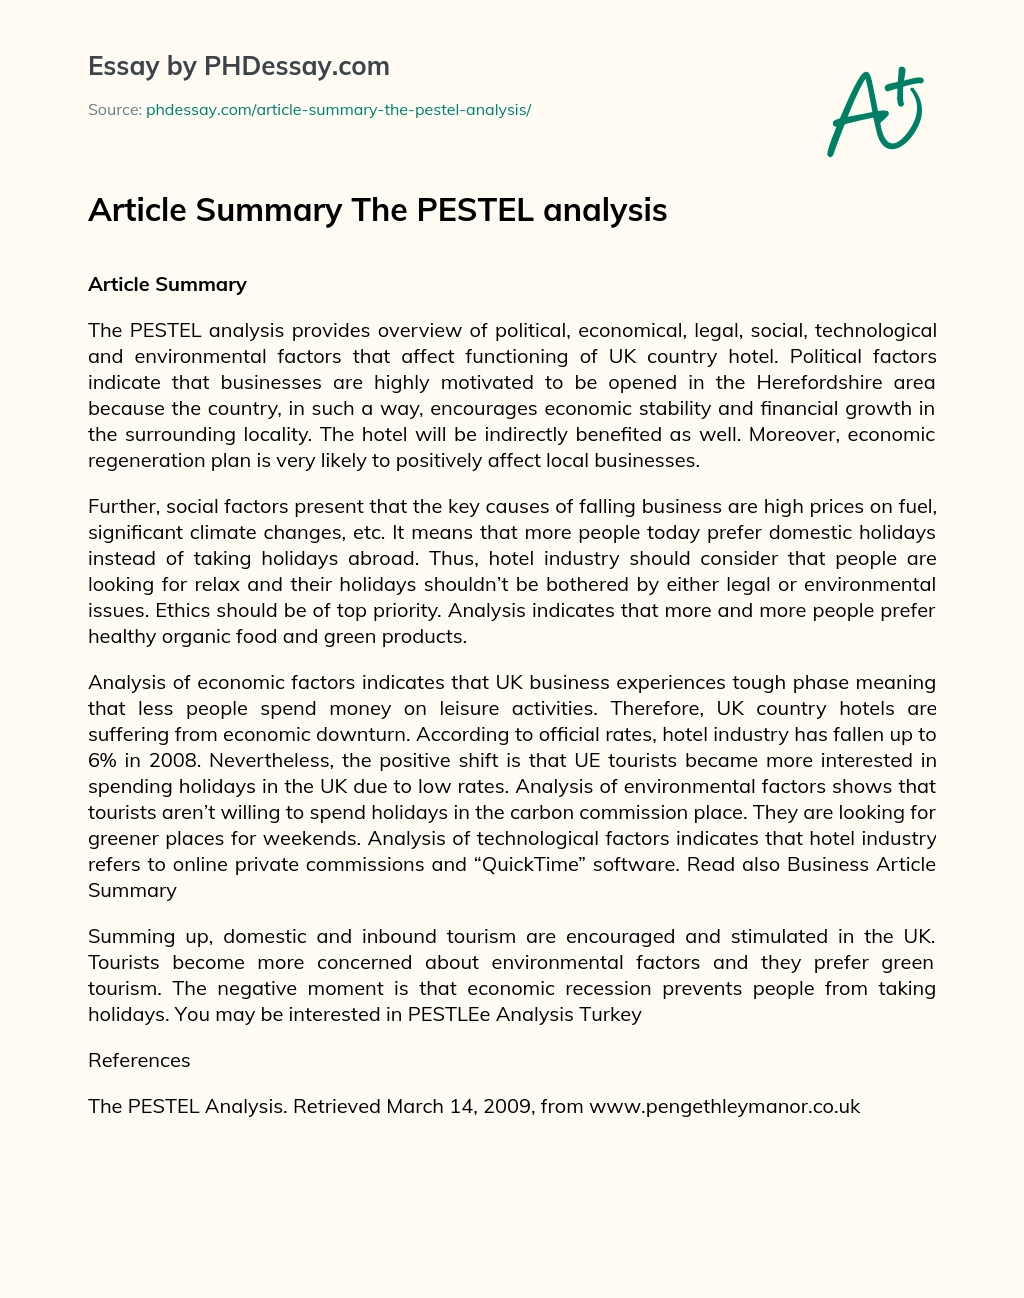 Article Summary The PESTEL analysis essay